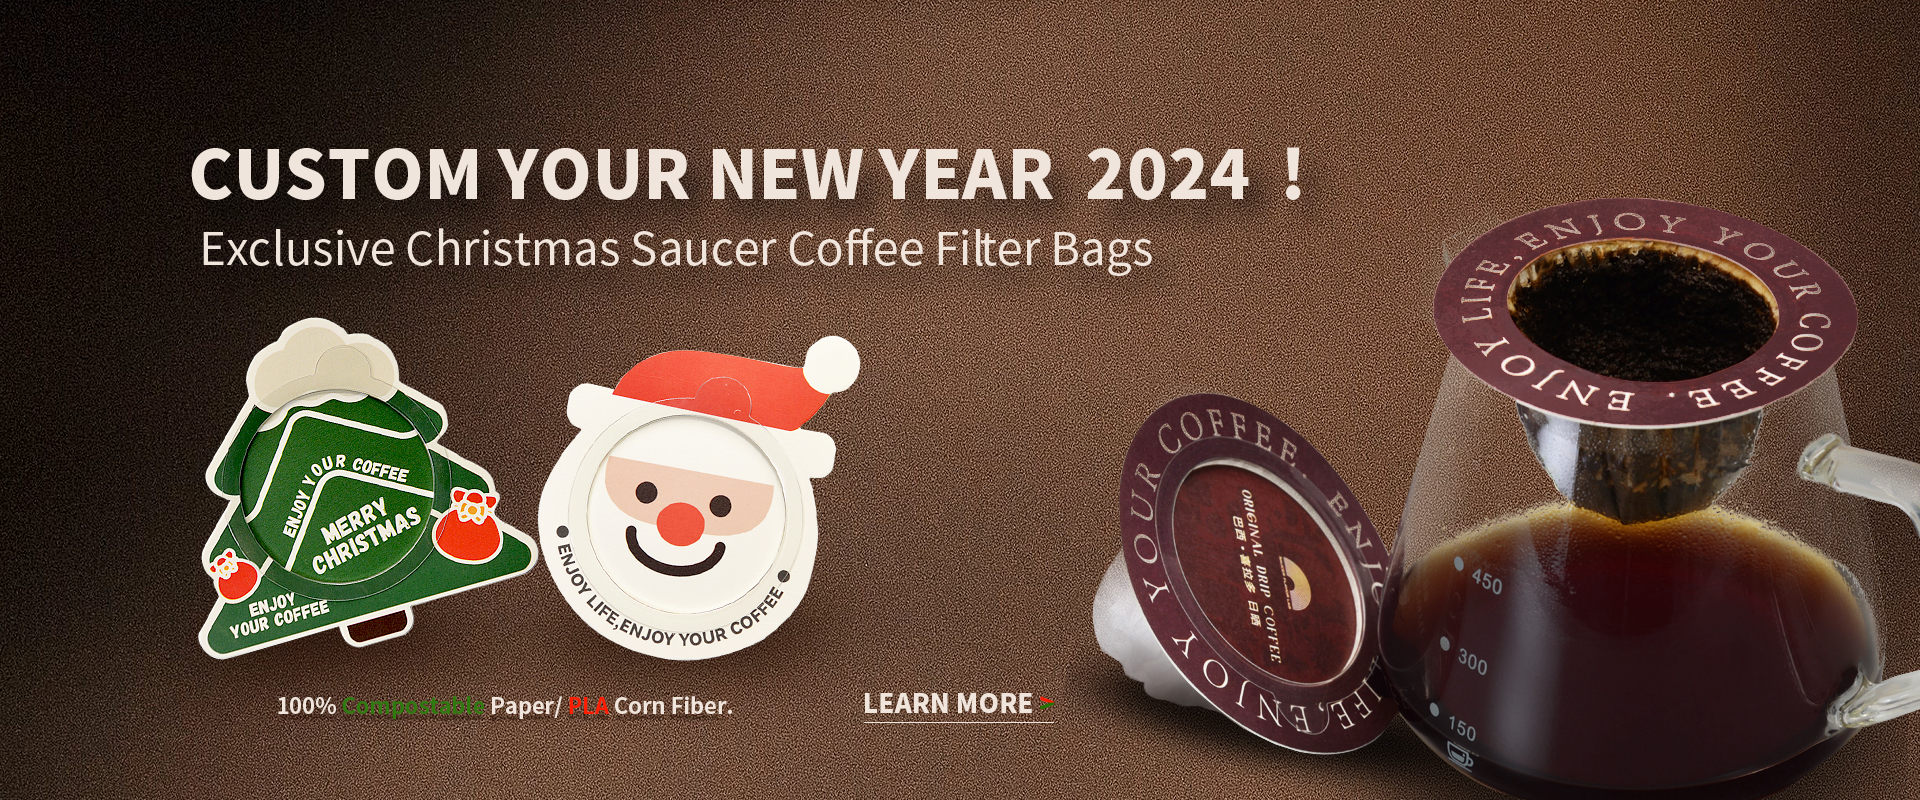 https://www.coffeeteeabag.com/chritmas-fedora-eco-friends-saucer-drip-coffee-filter-bag-product/